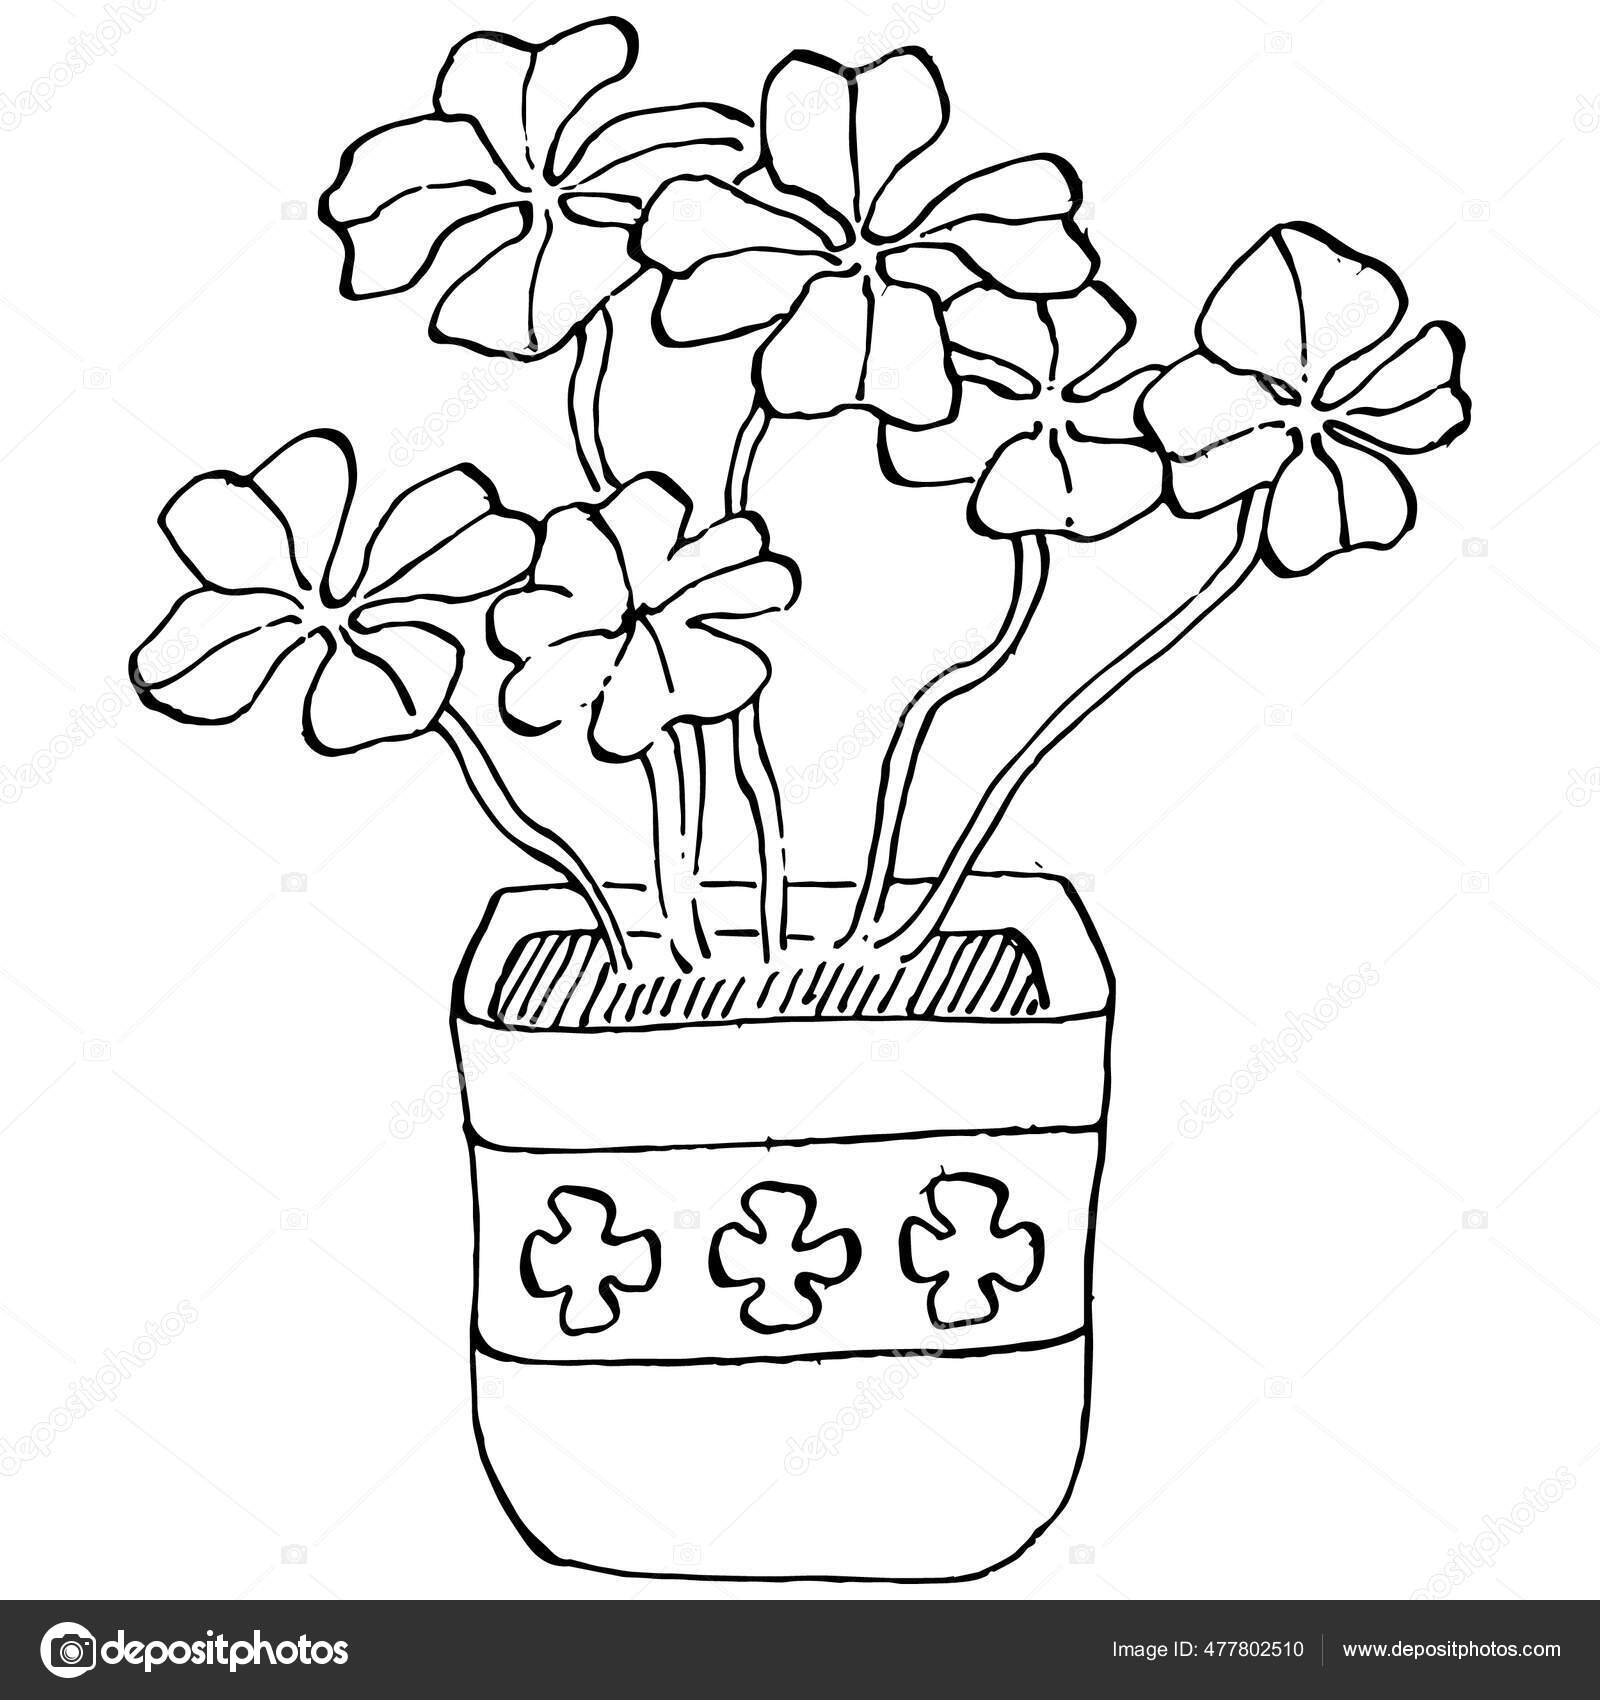 depositphotos 477802510 stock illustration home plant pots sketch outline